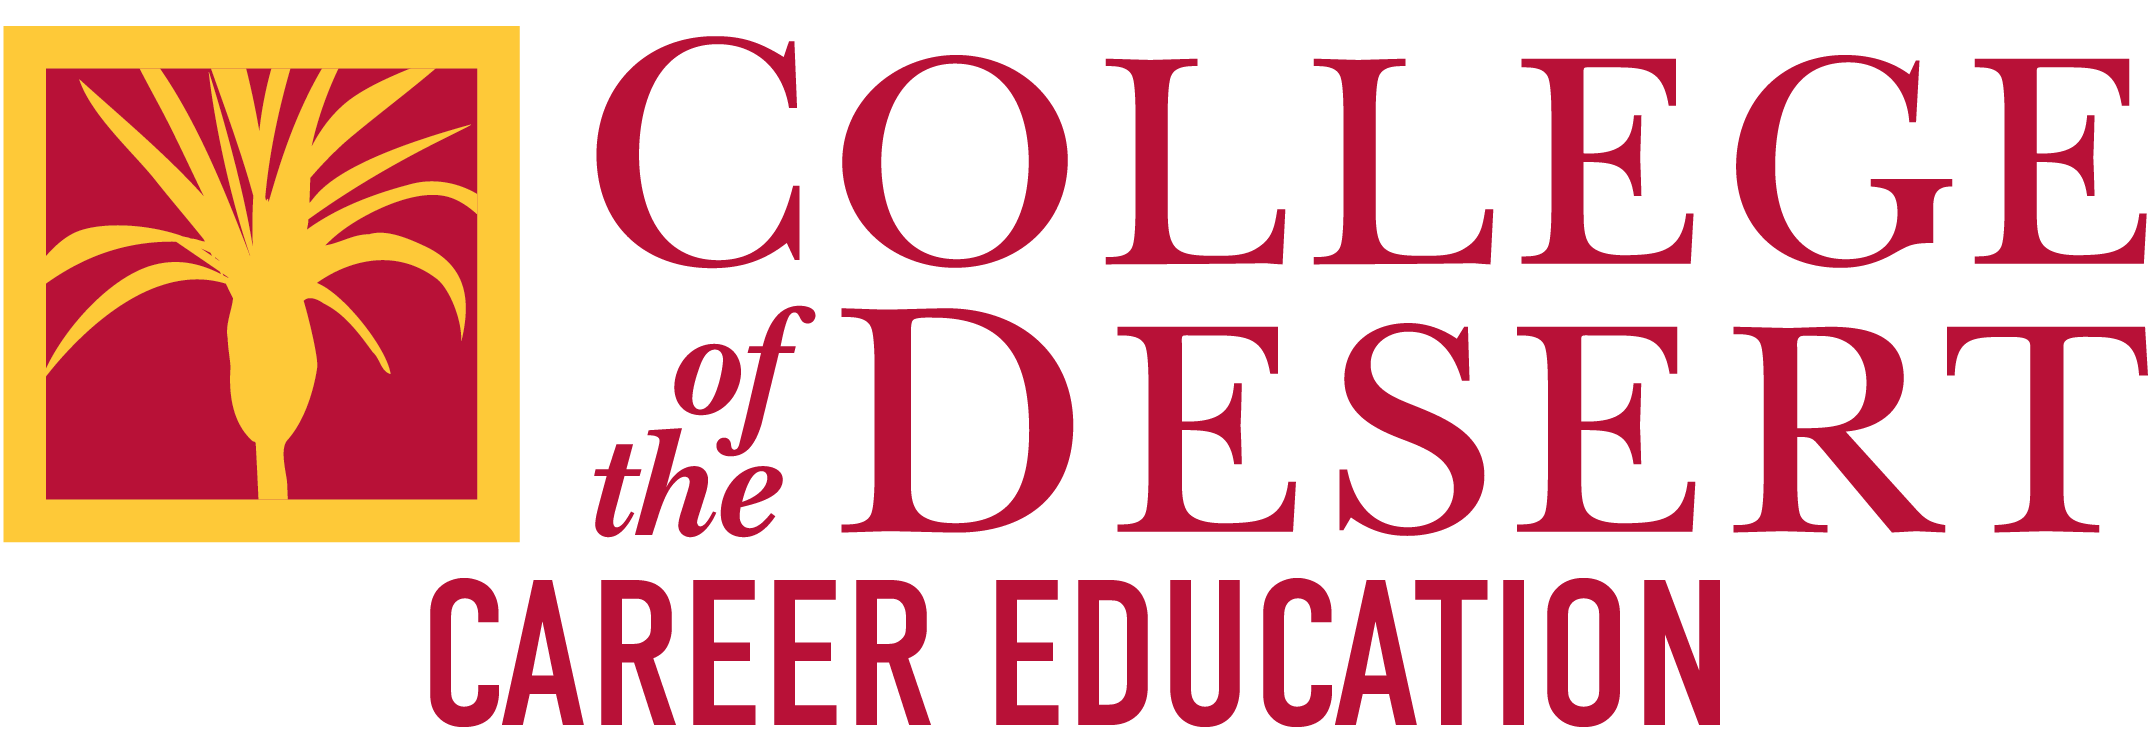 Career Education logo